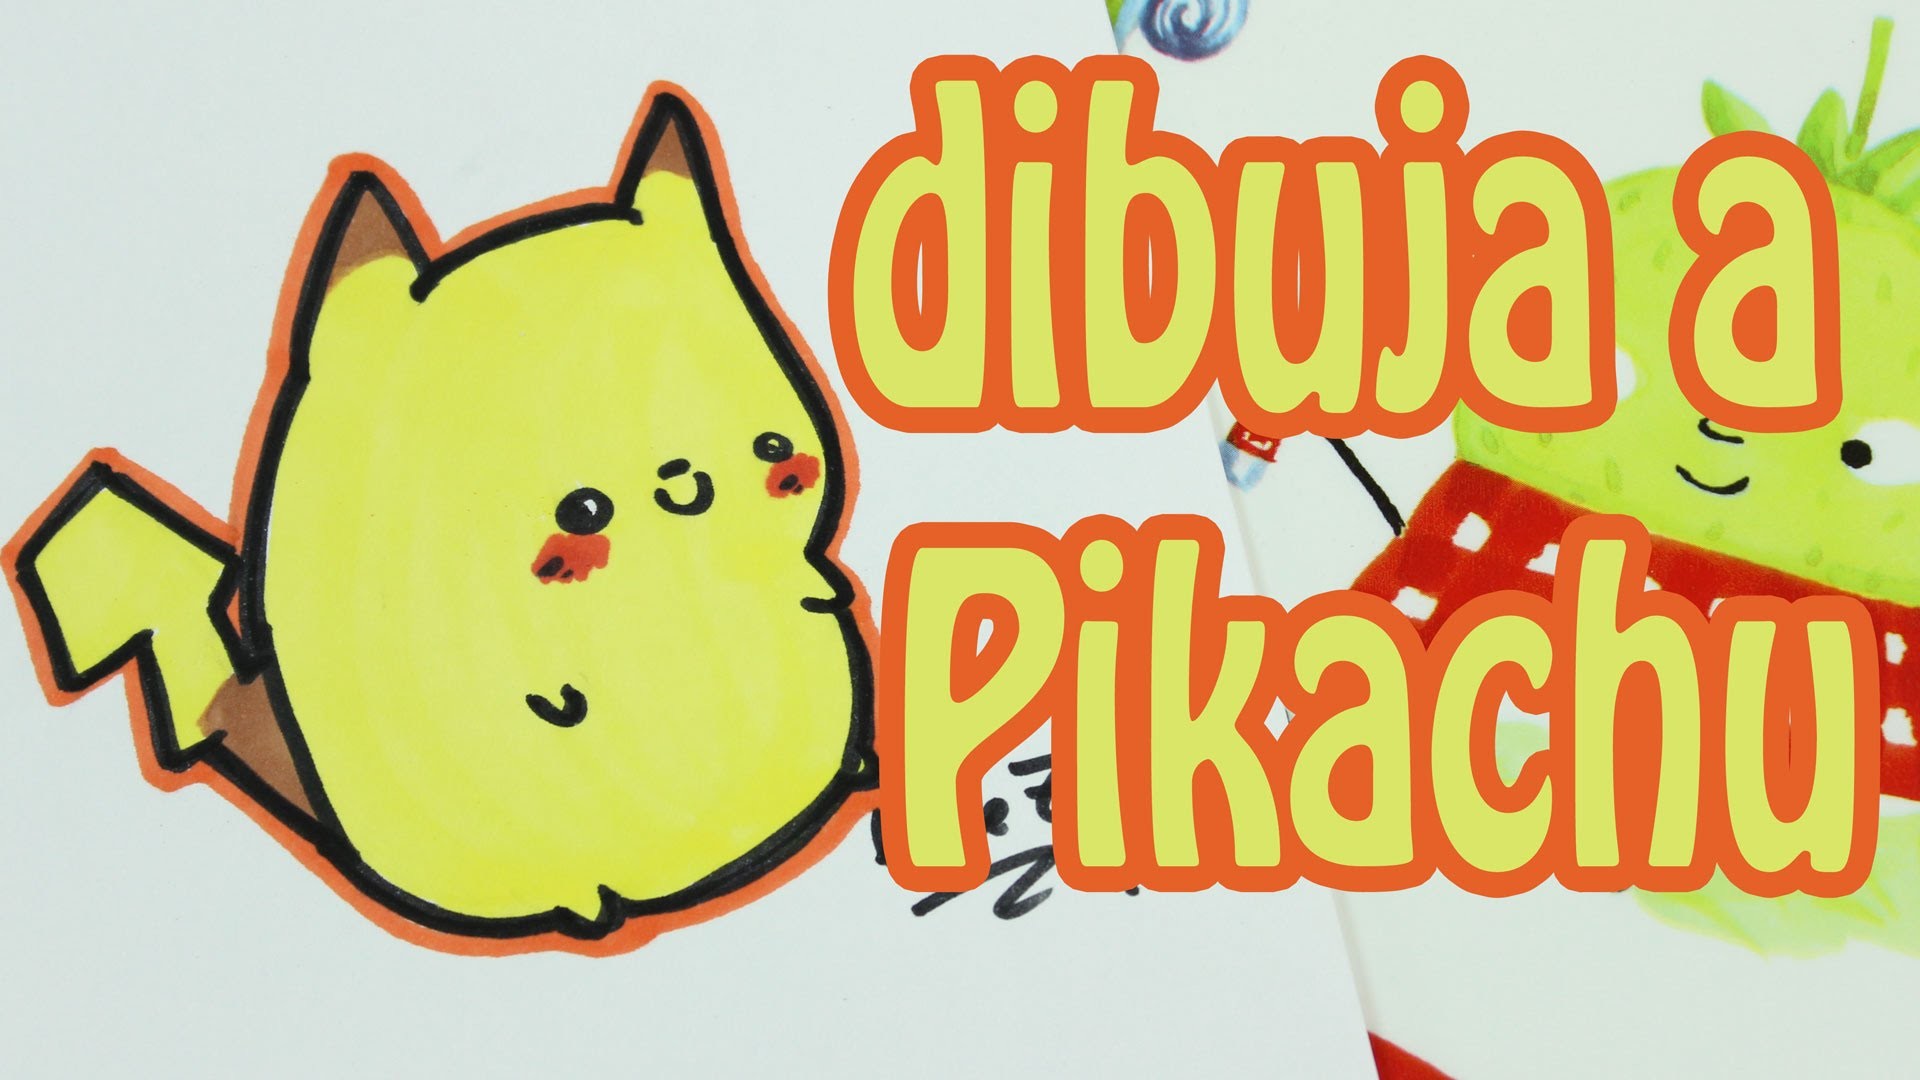 Cómo dibujar a Pikachu de Pokemon kawaii.how to draw a cute Pikachu